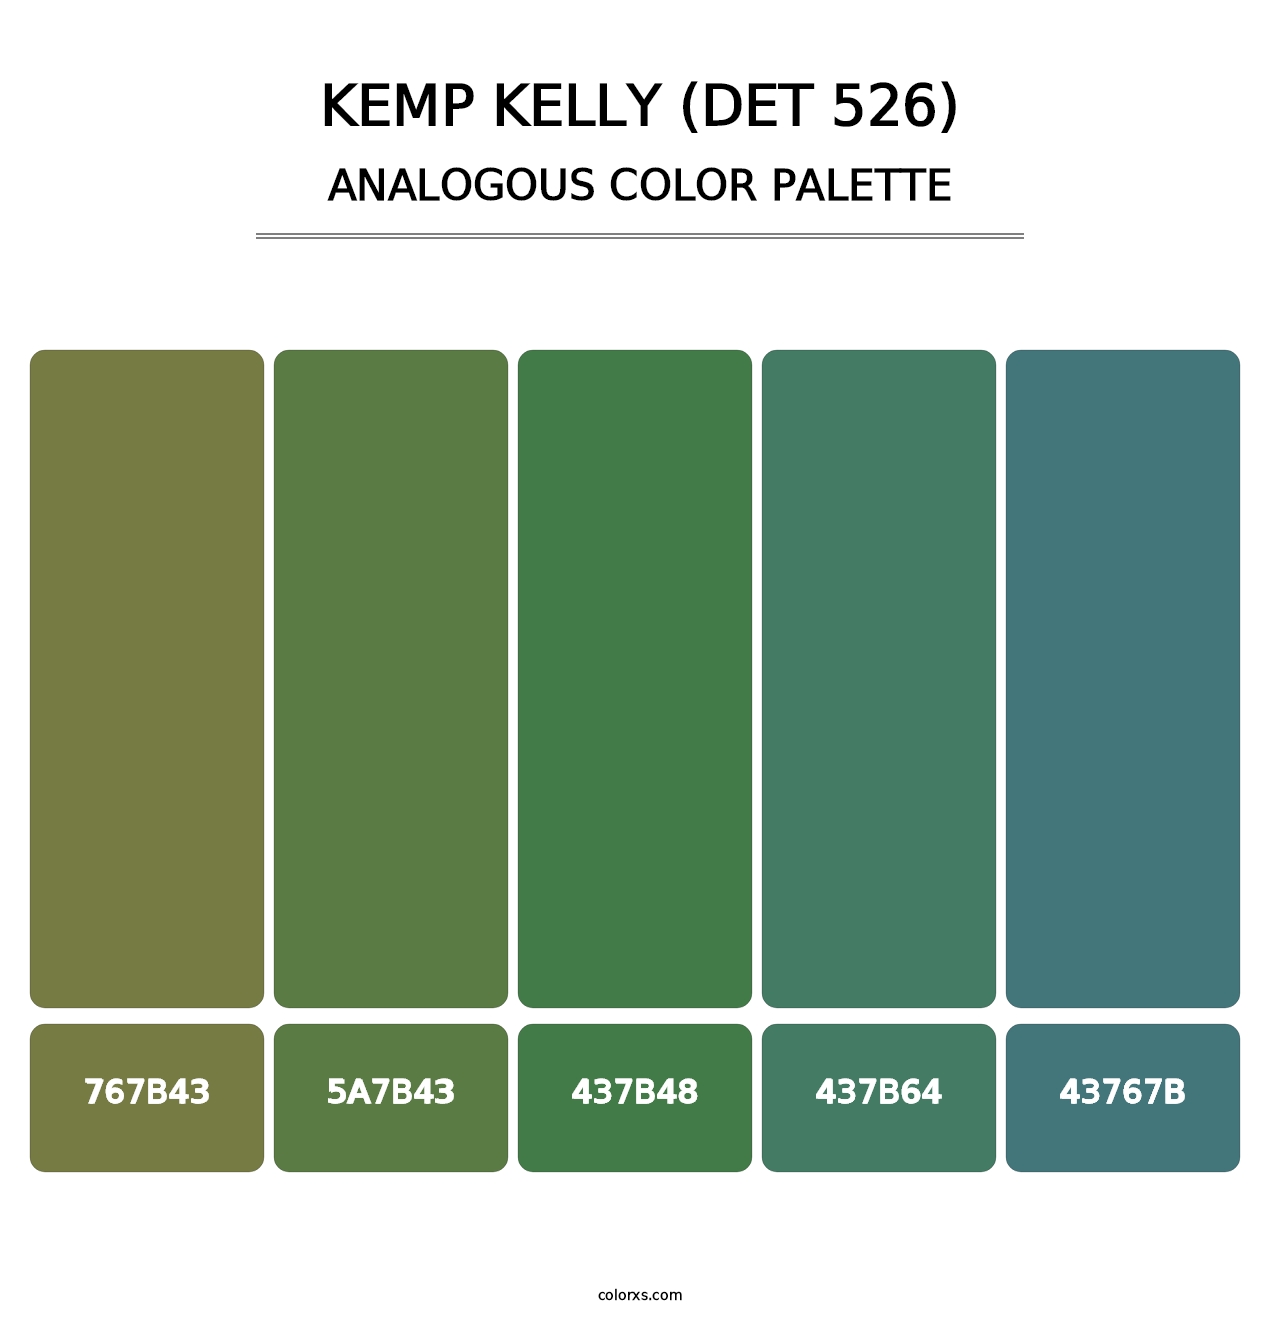 Kemp Kelly (DET 526) - Analogous Color Palette